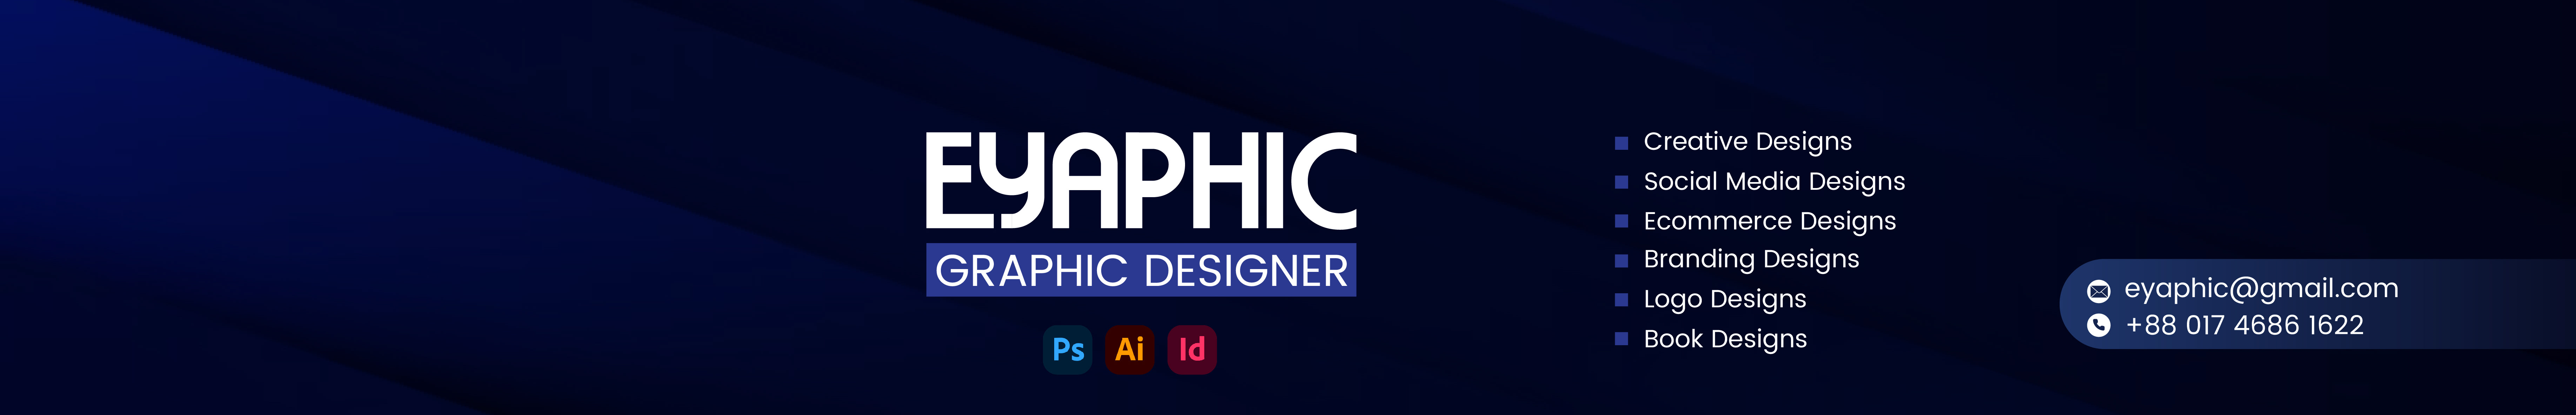 Eyaphic (Graphic Designer)'s profile banner